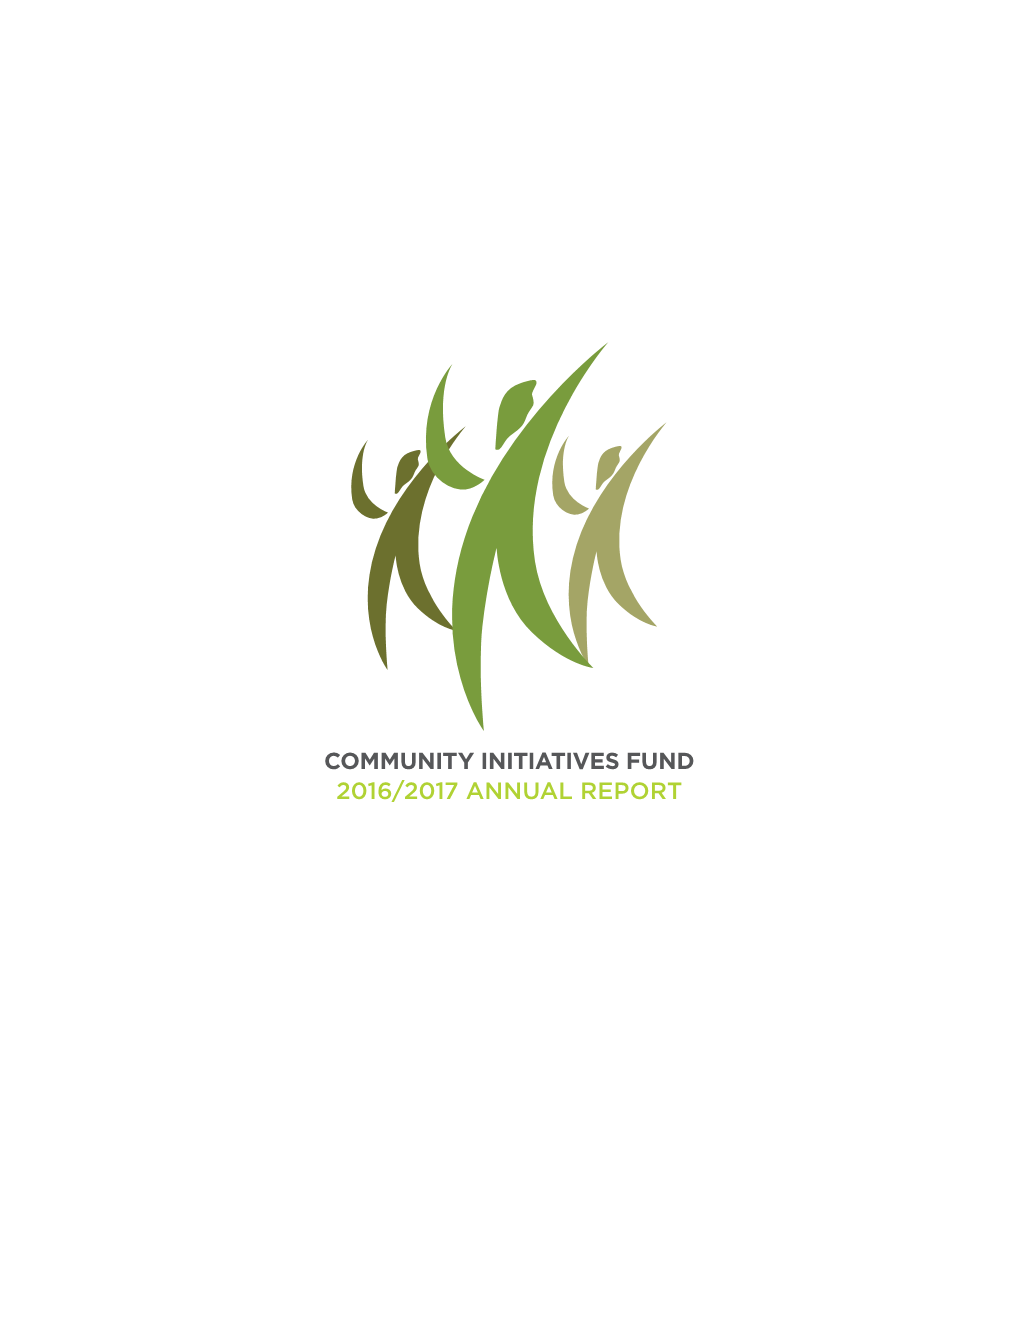 Community Initiatives Fund 2016/2017 Annual Report